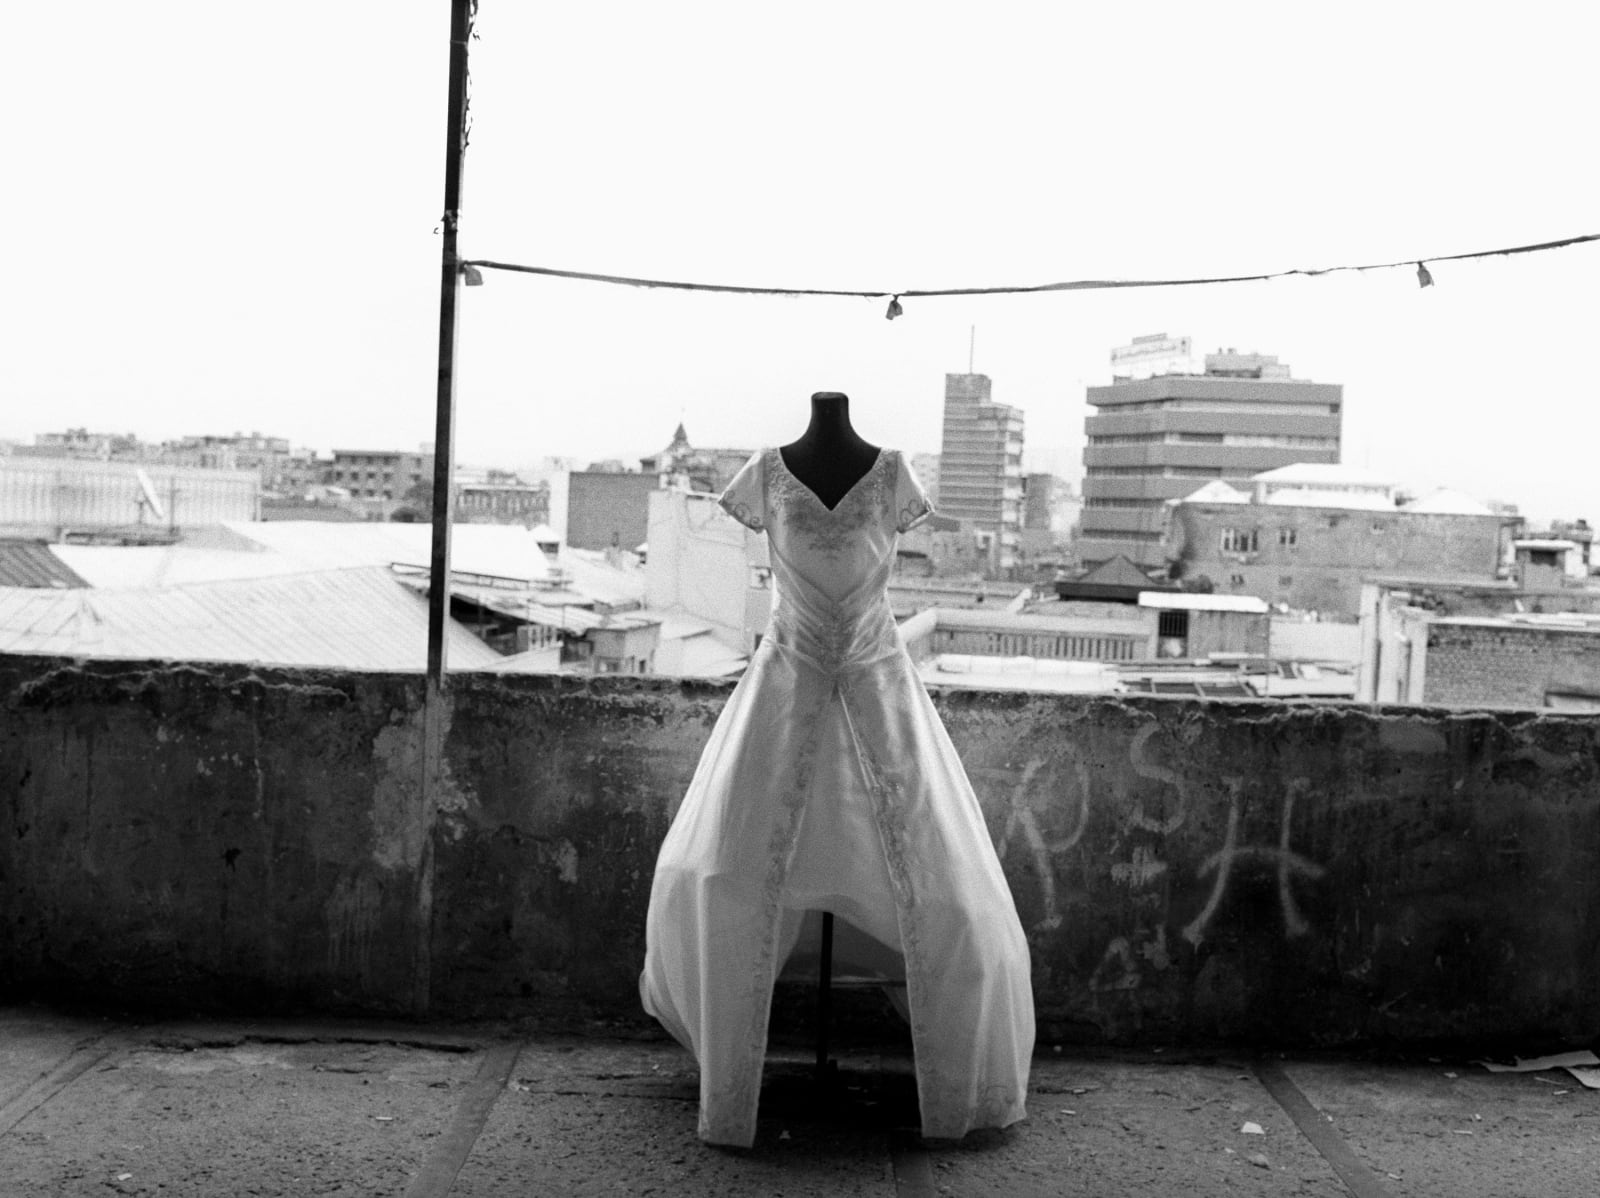 Tahmineh Monzavi, The Brides of Mojhbar al-Dowleh (mannequin outside), 2012